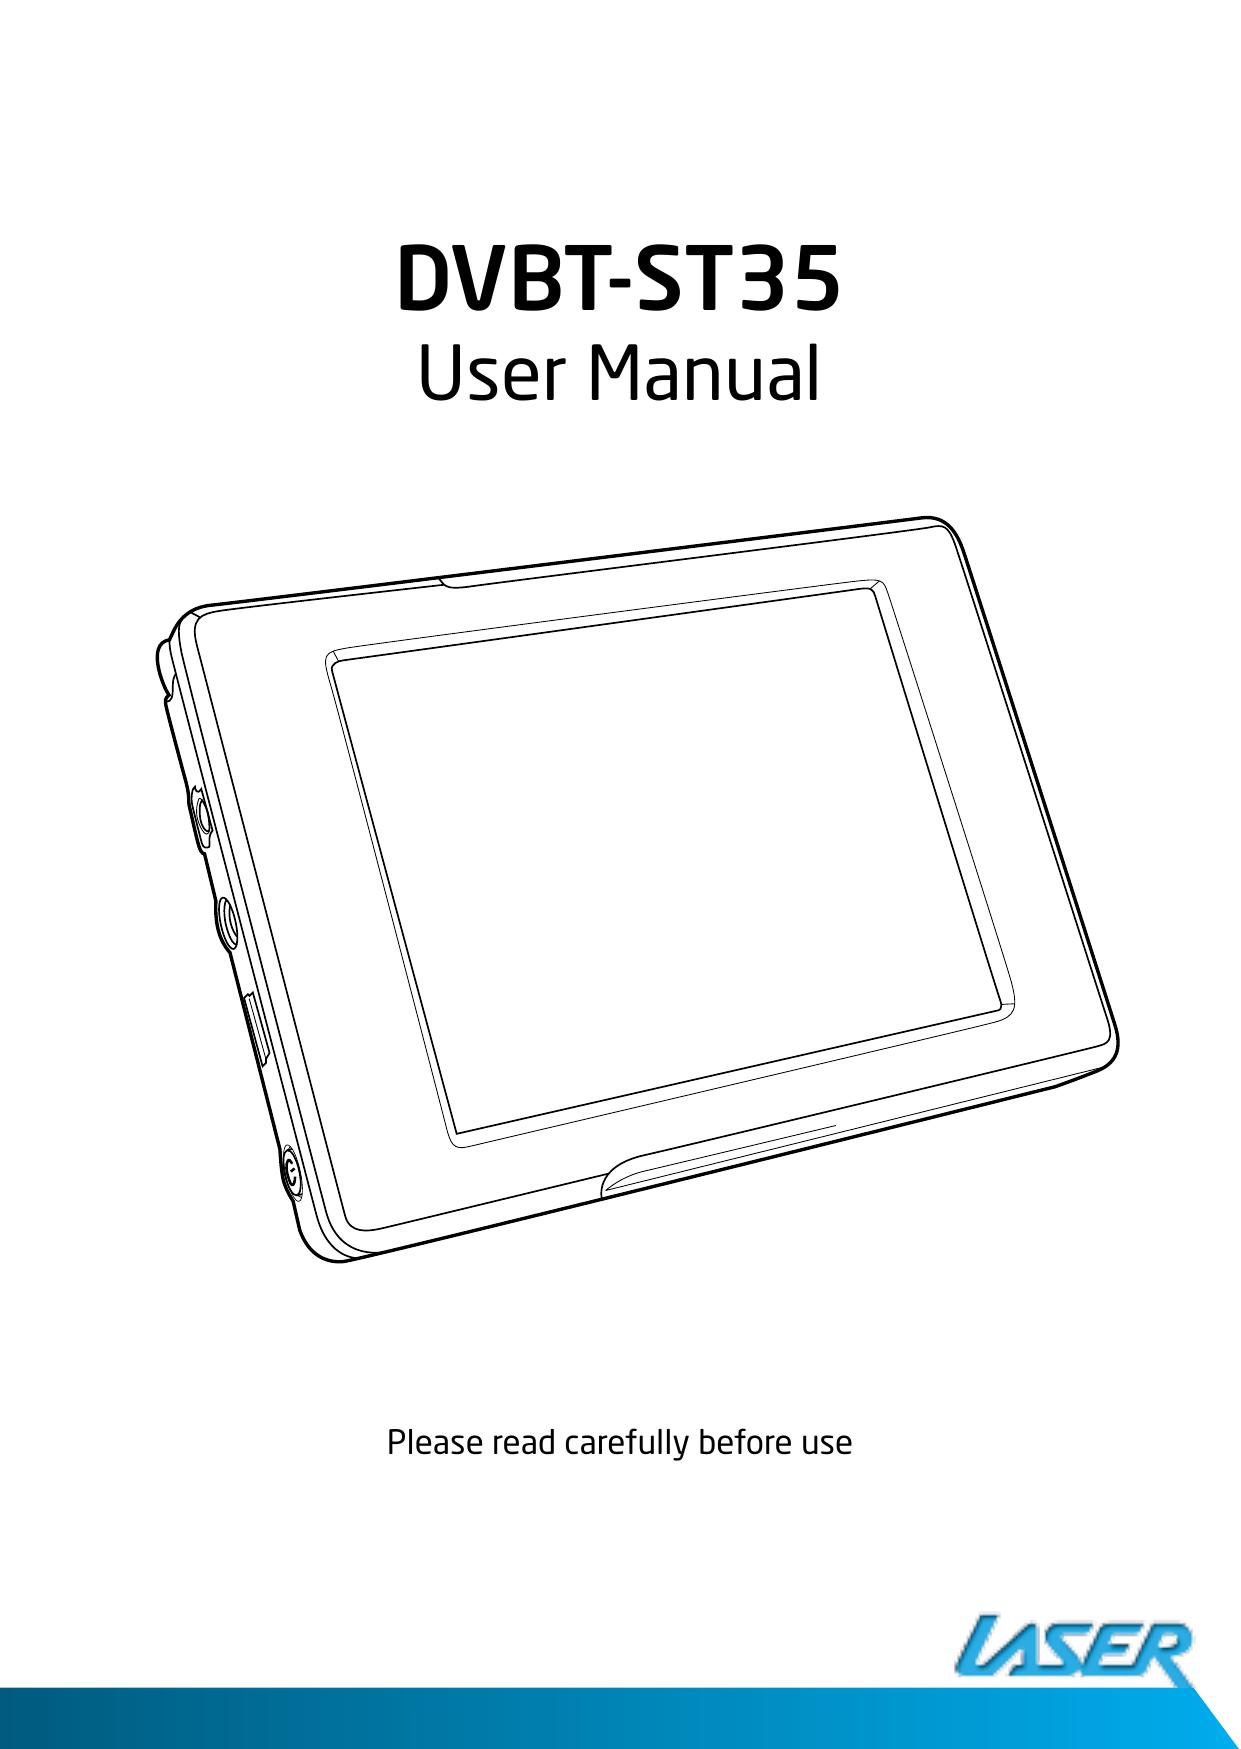 Laser DVBT-ST35 Handheld TV User Manual